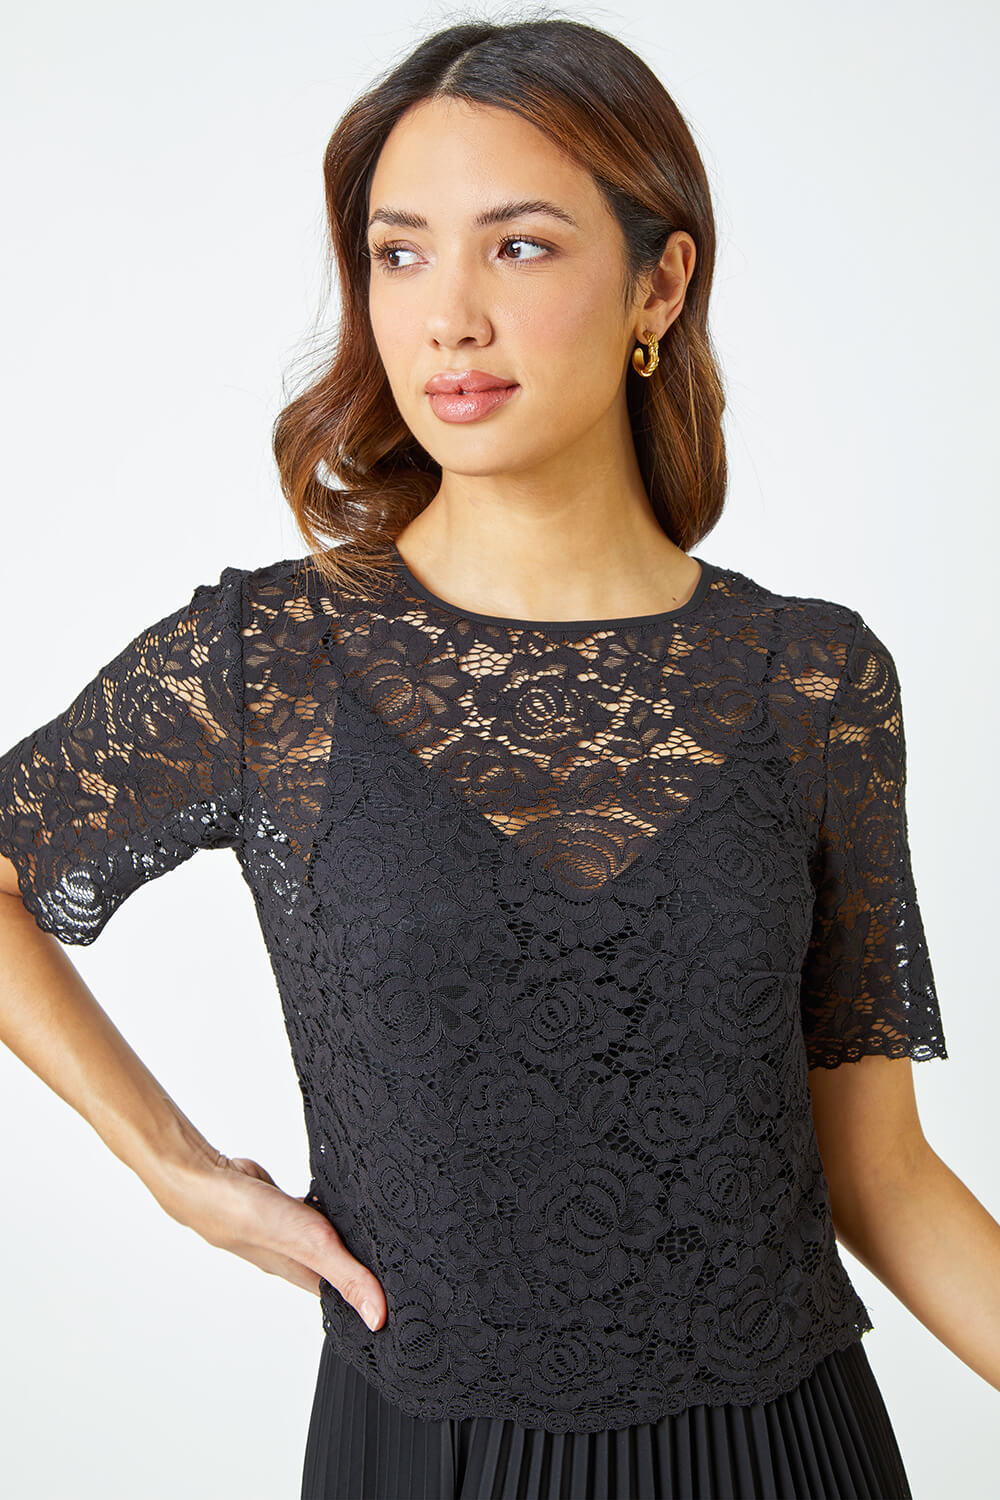 Black Lace Top Overlay Pleated Midi Dress, Image 4 of 5